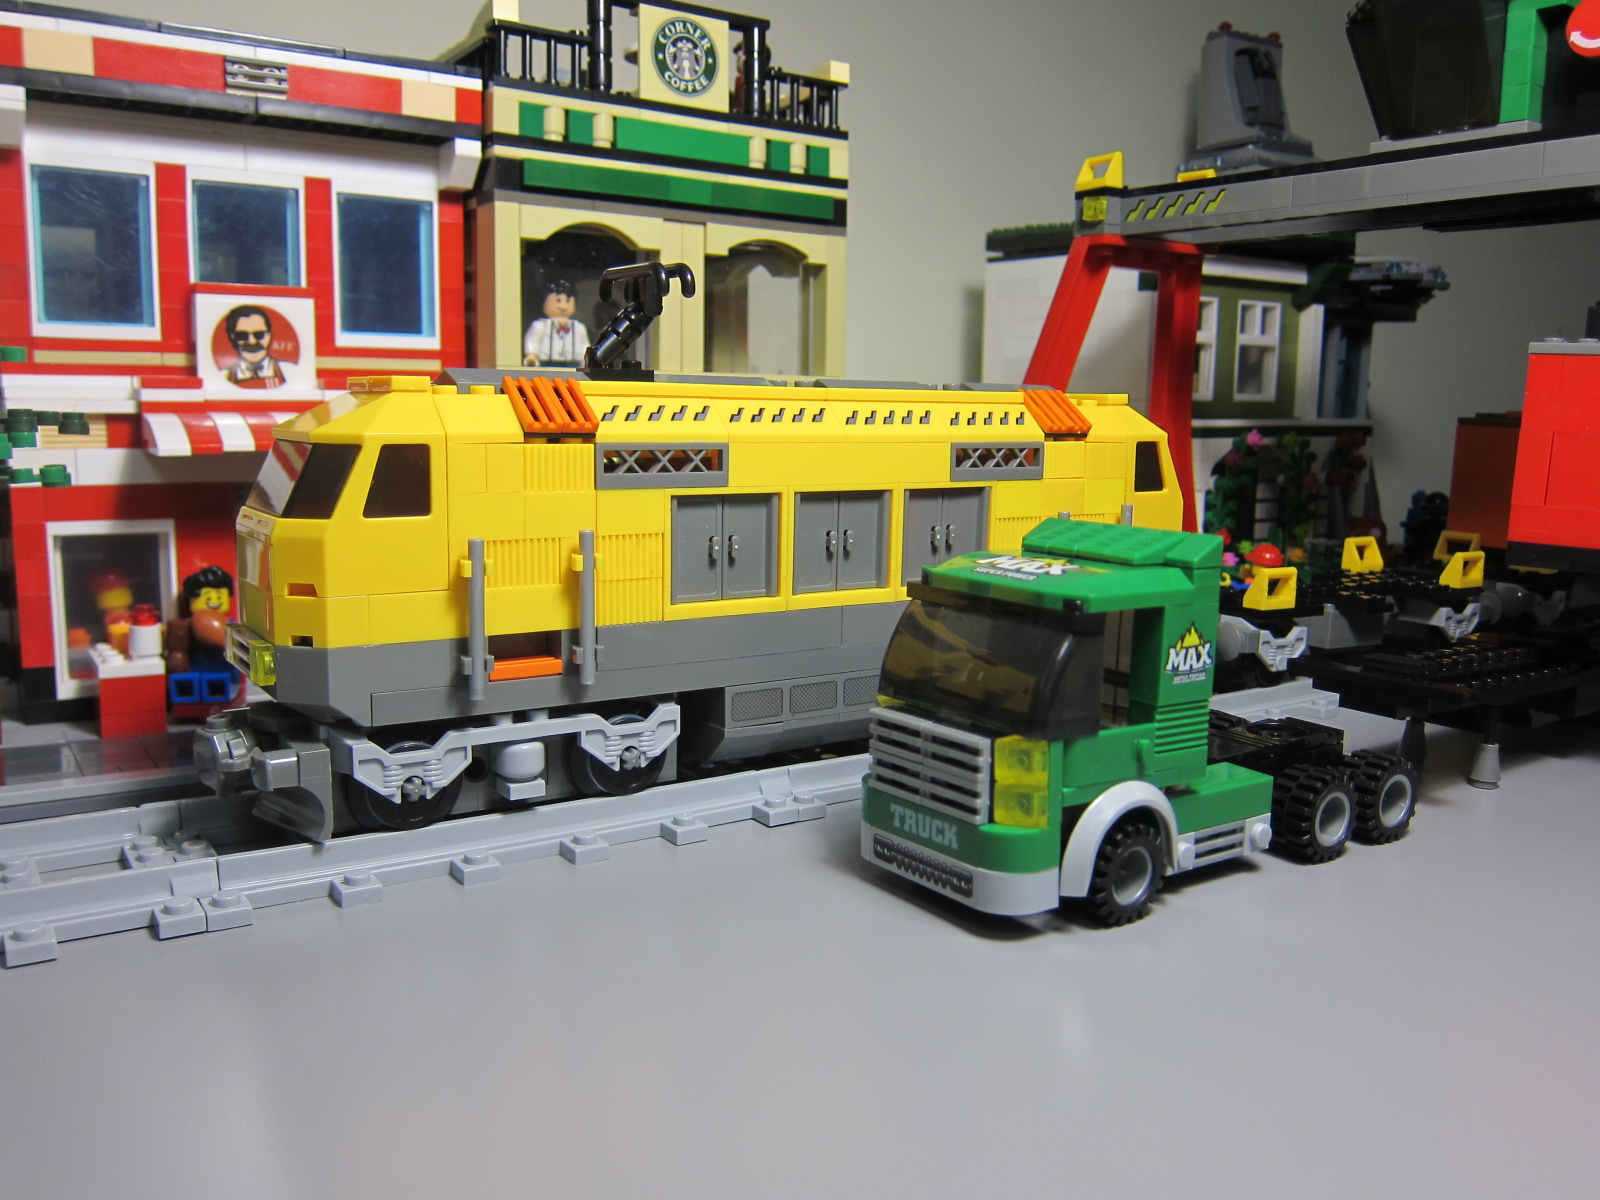 lego yellow cargo train